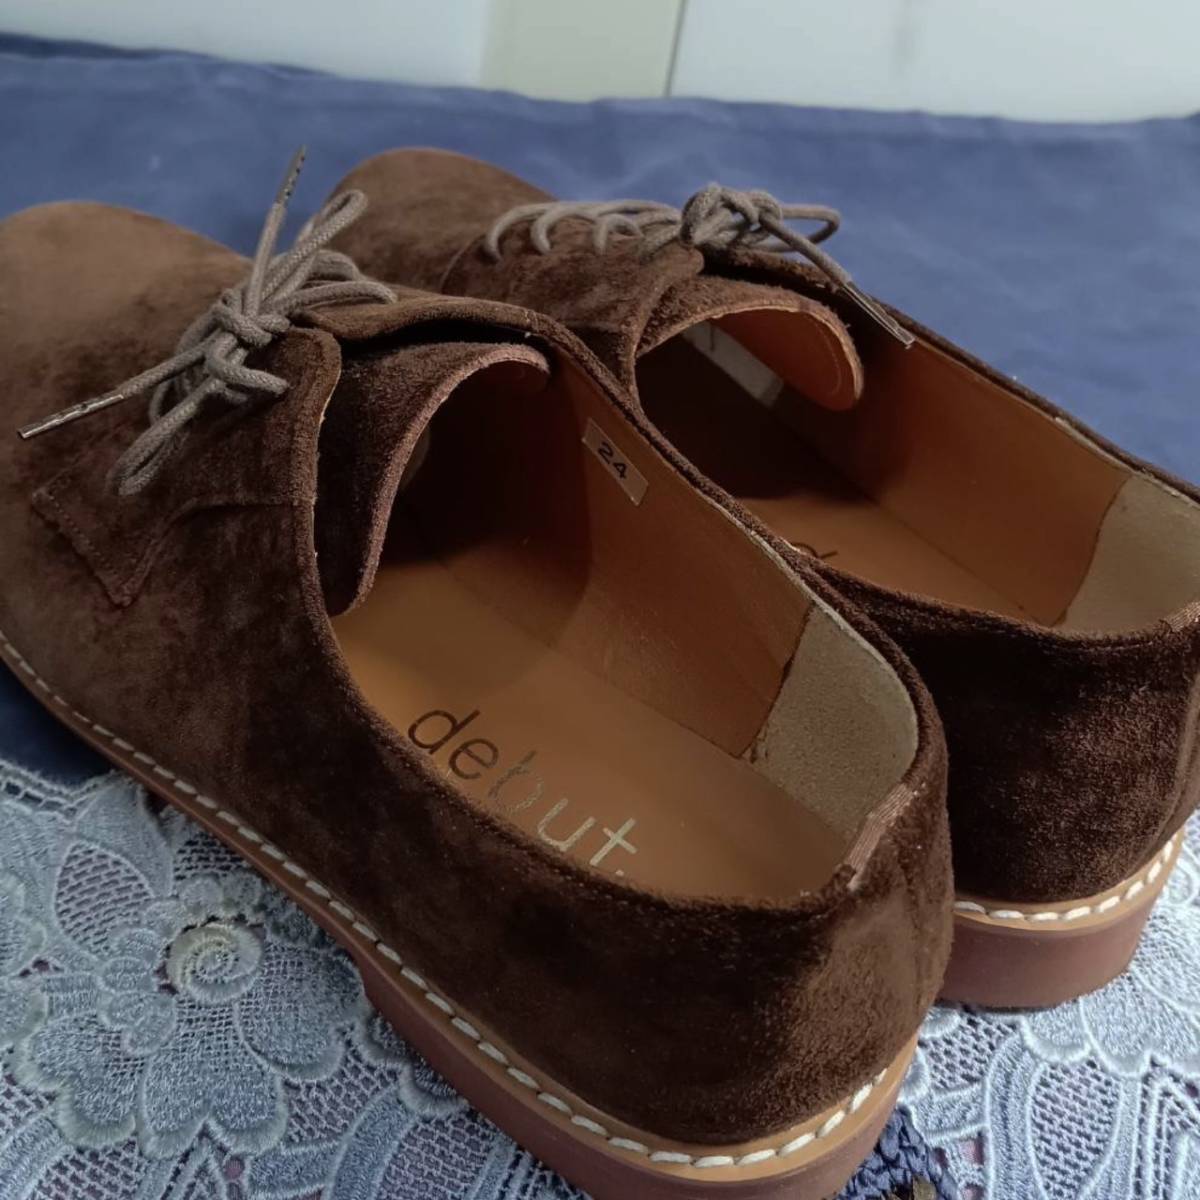  beautiful goods * debut *uo- King shoes 24cm dark brown made in Japan 